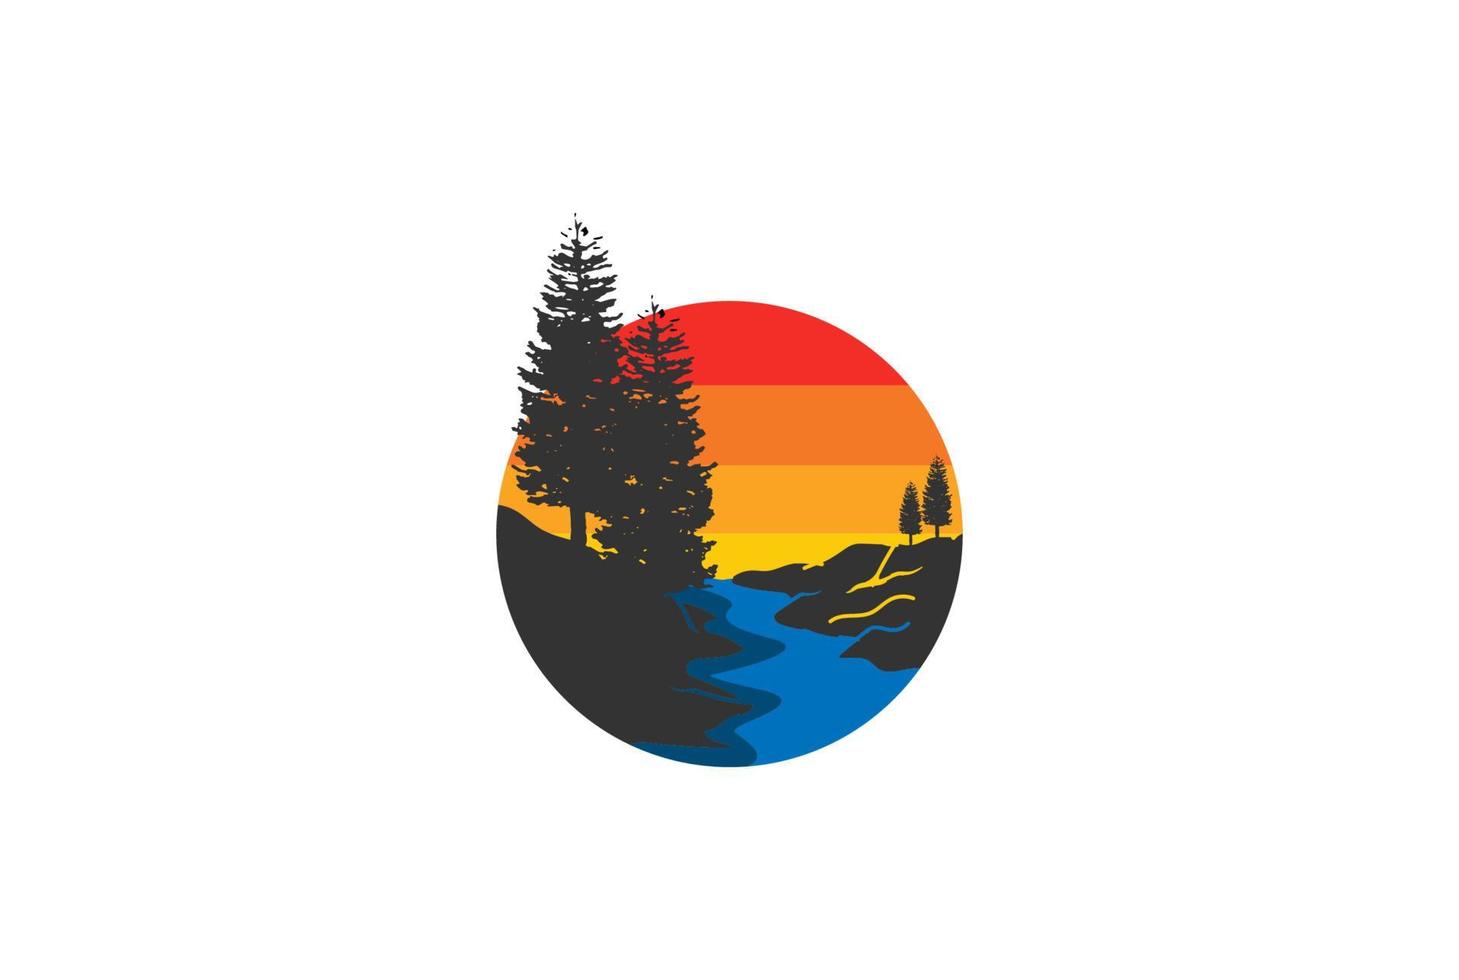 Sunset Pine Evergreen Conifer Cedar Spruce Larch Cypress Fir Trees Forest with River Creek Logo Design Vector